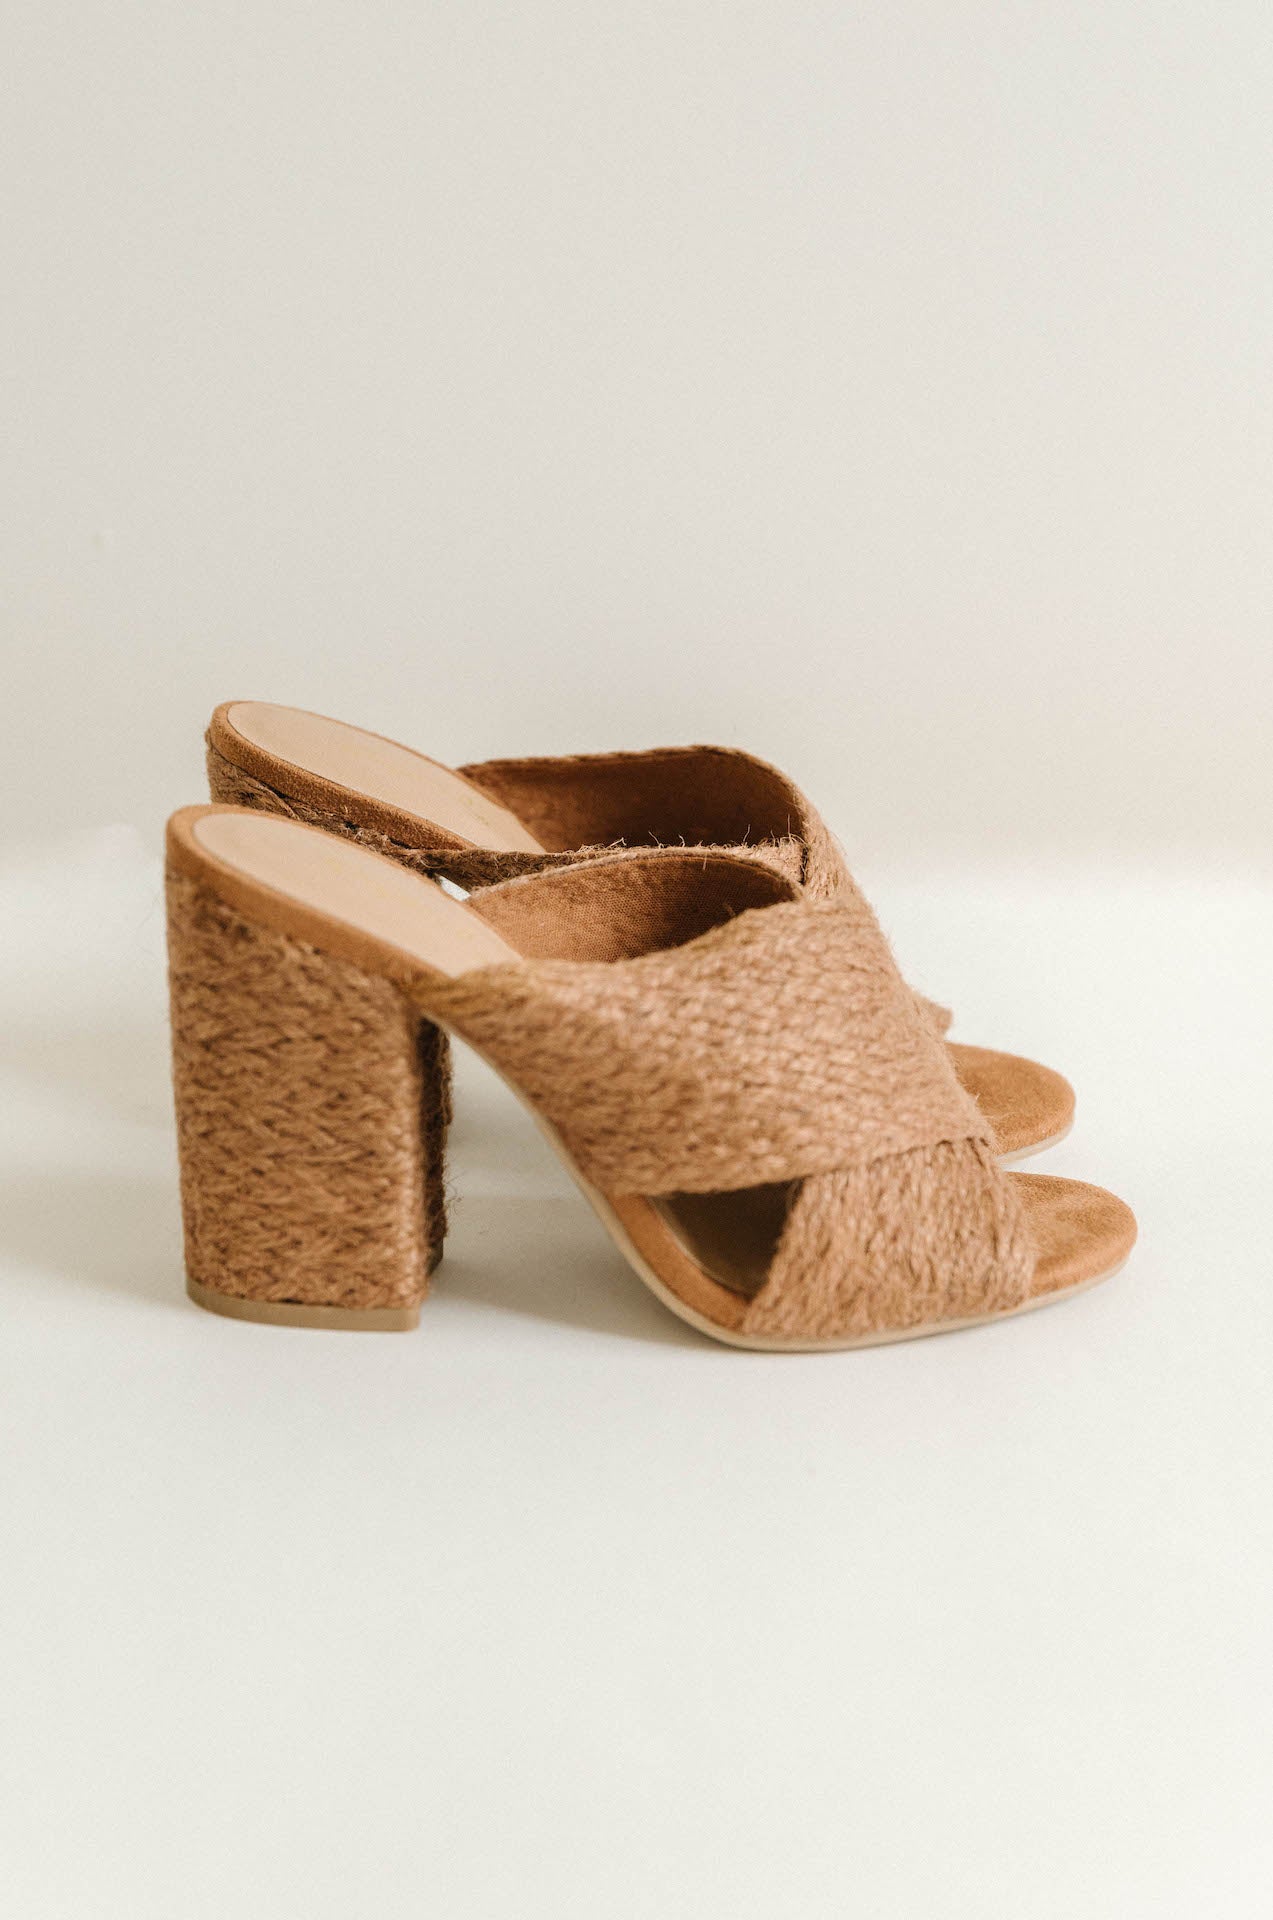 Matte brown point heels | Fashion heels, Elegant sandals, Casual shoes women